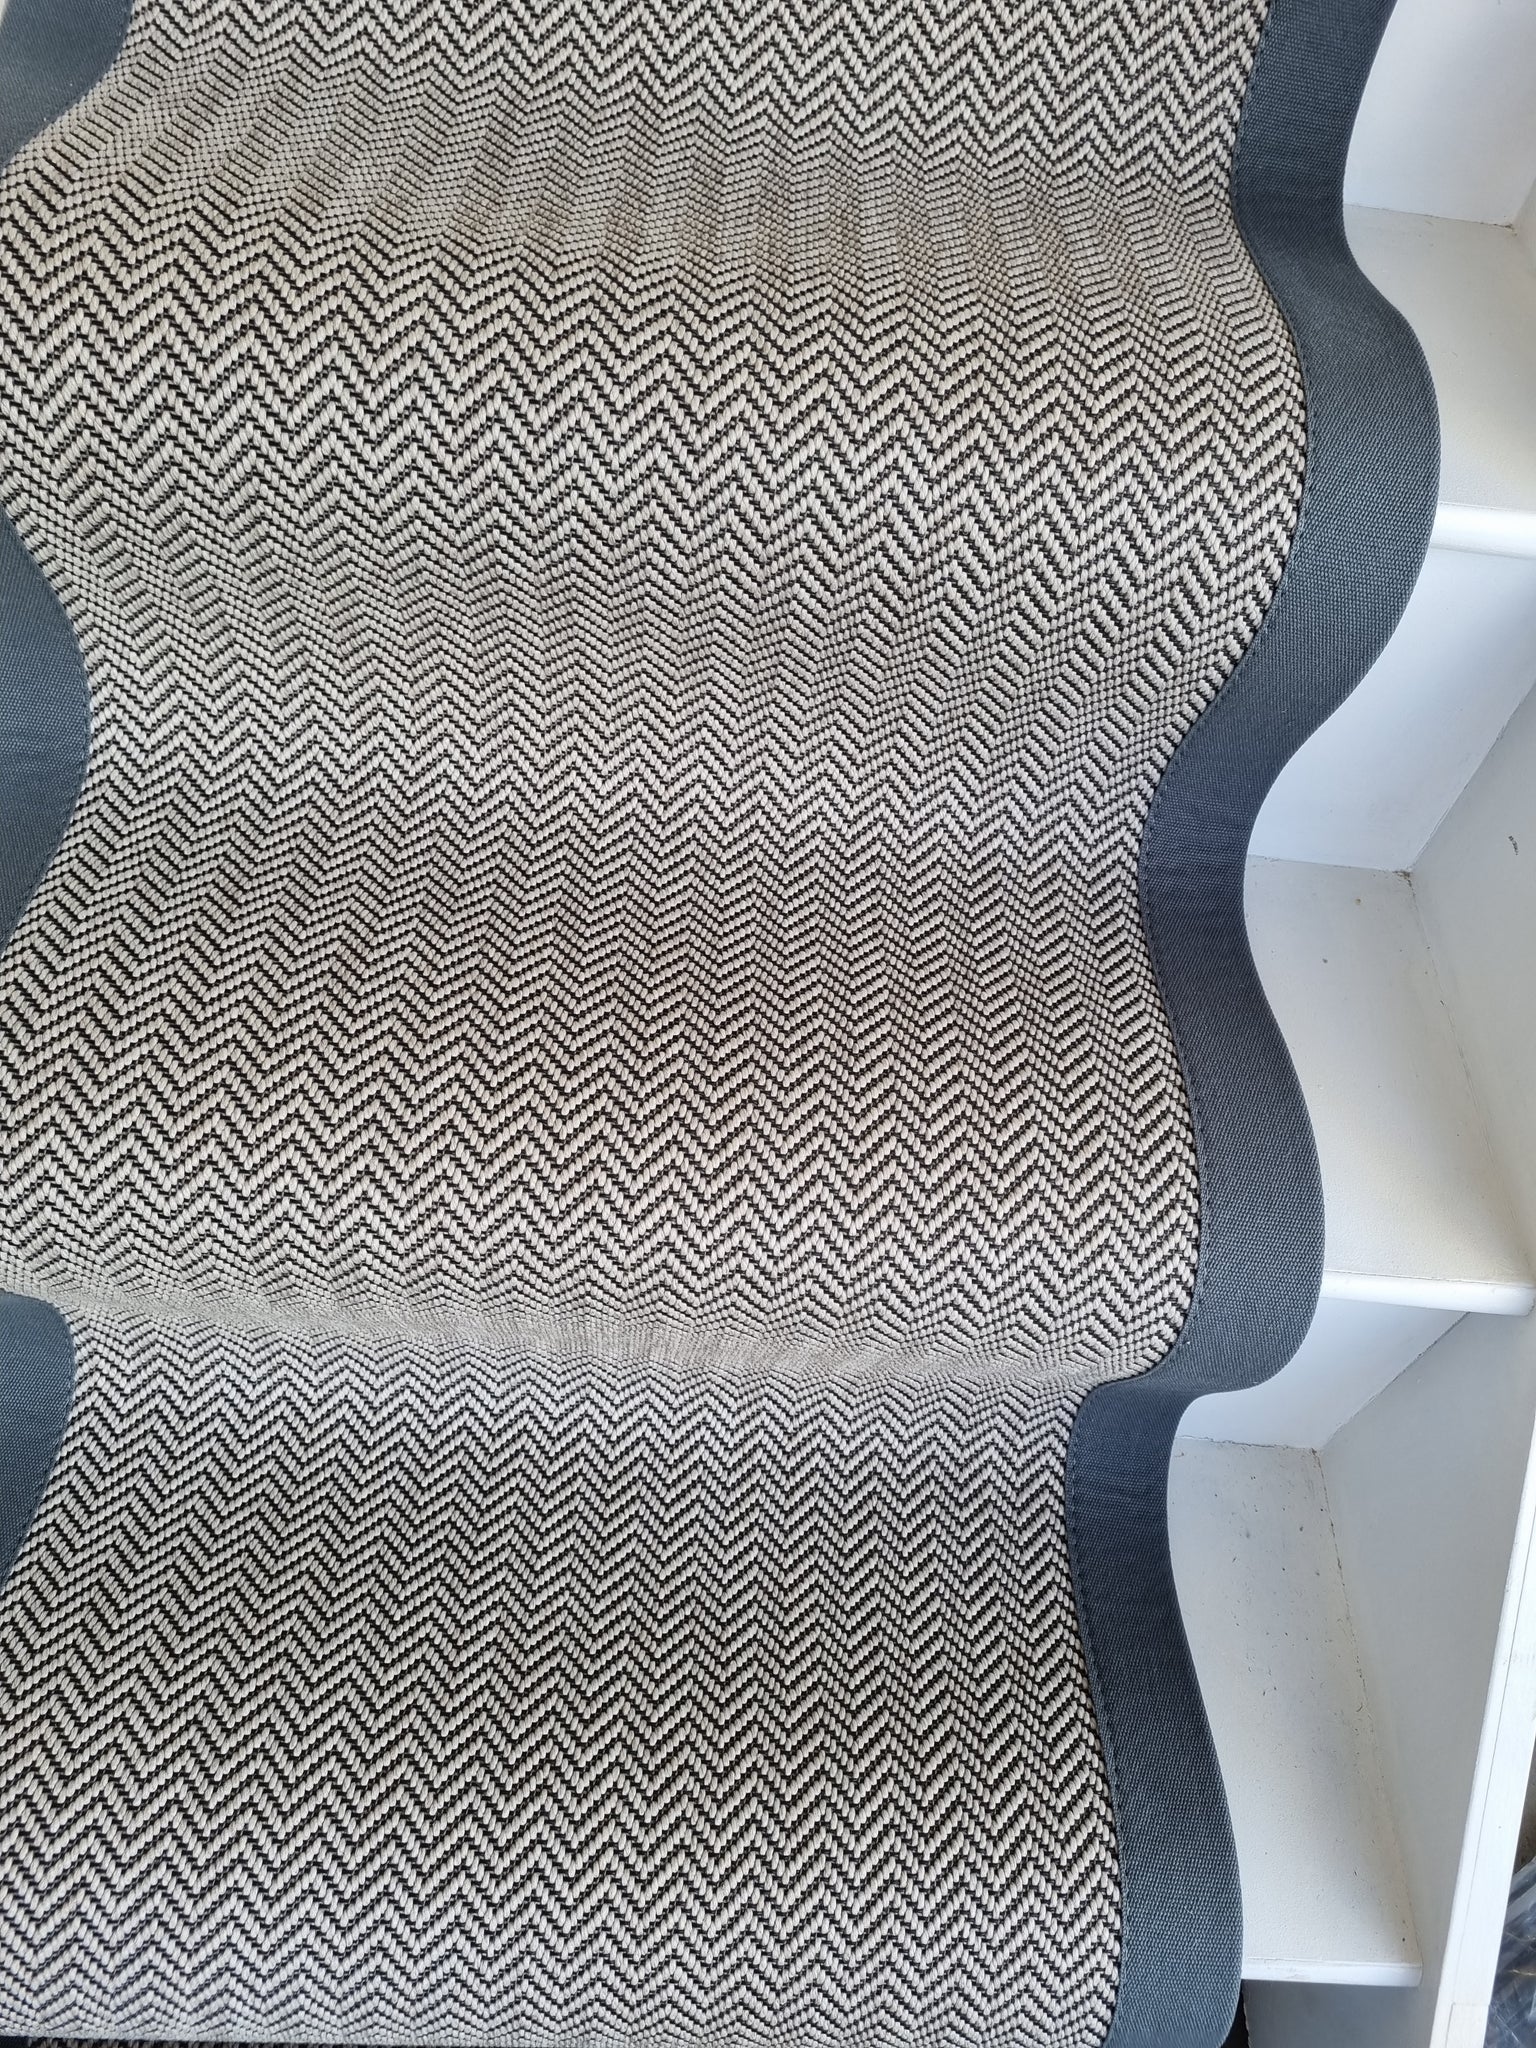 Black & White Herringbone Faux Sisal Carpet Stair Runner with Gun Metal Grey Cotton border